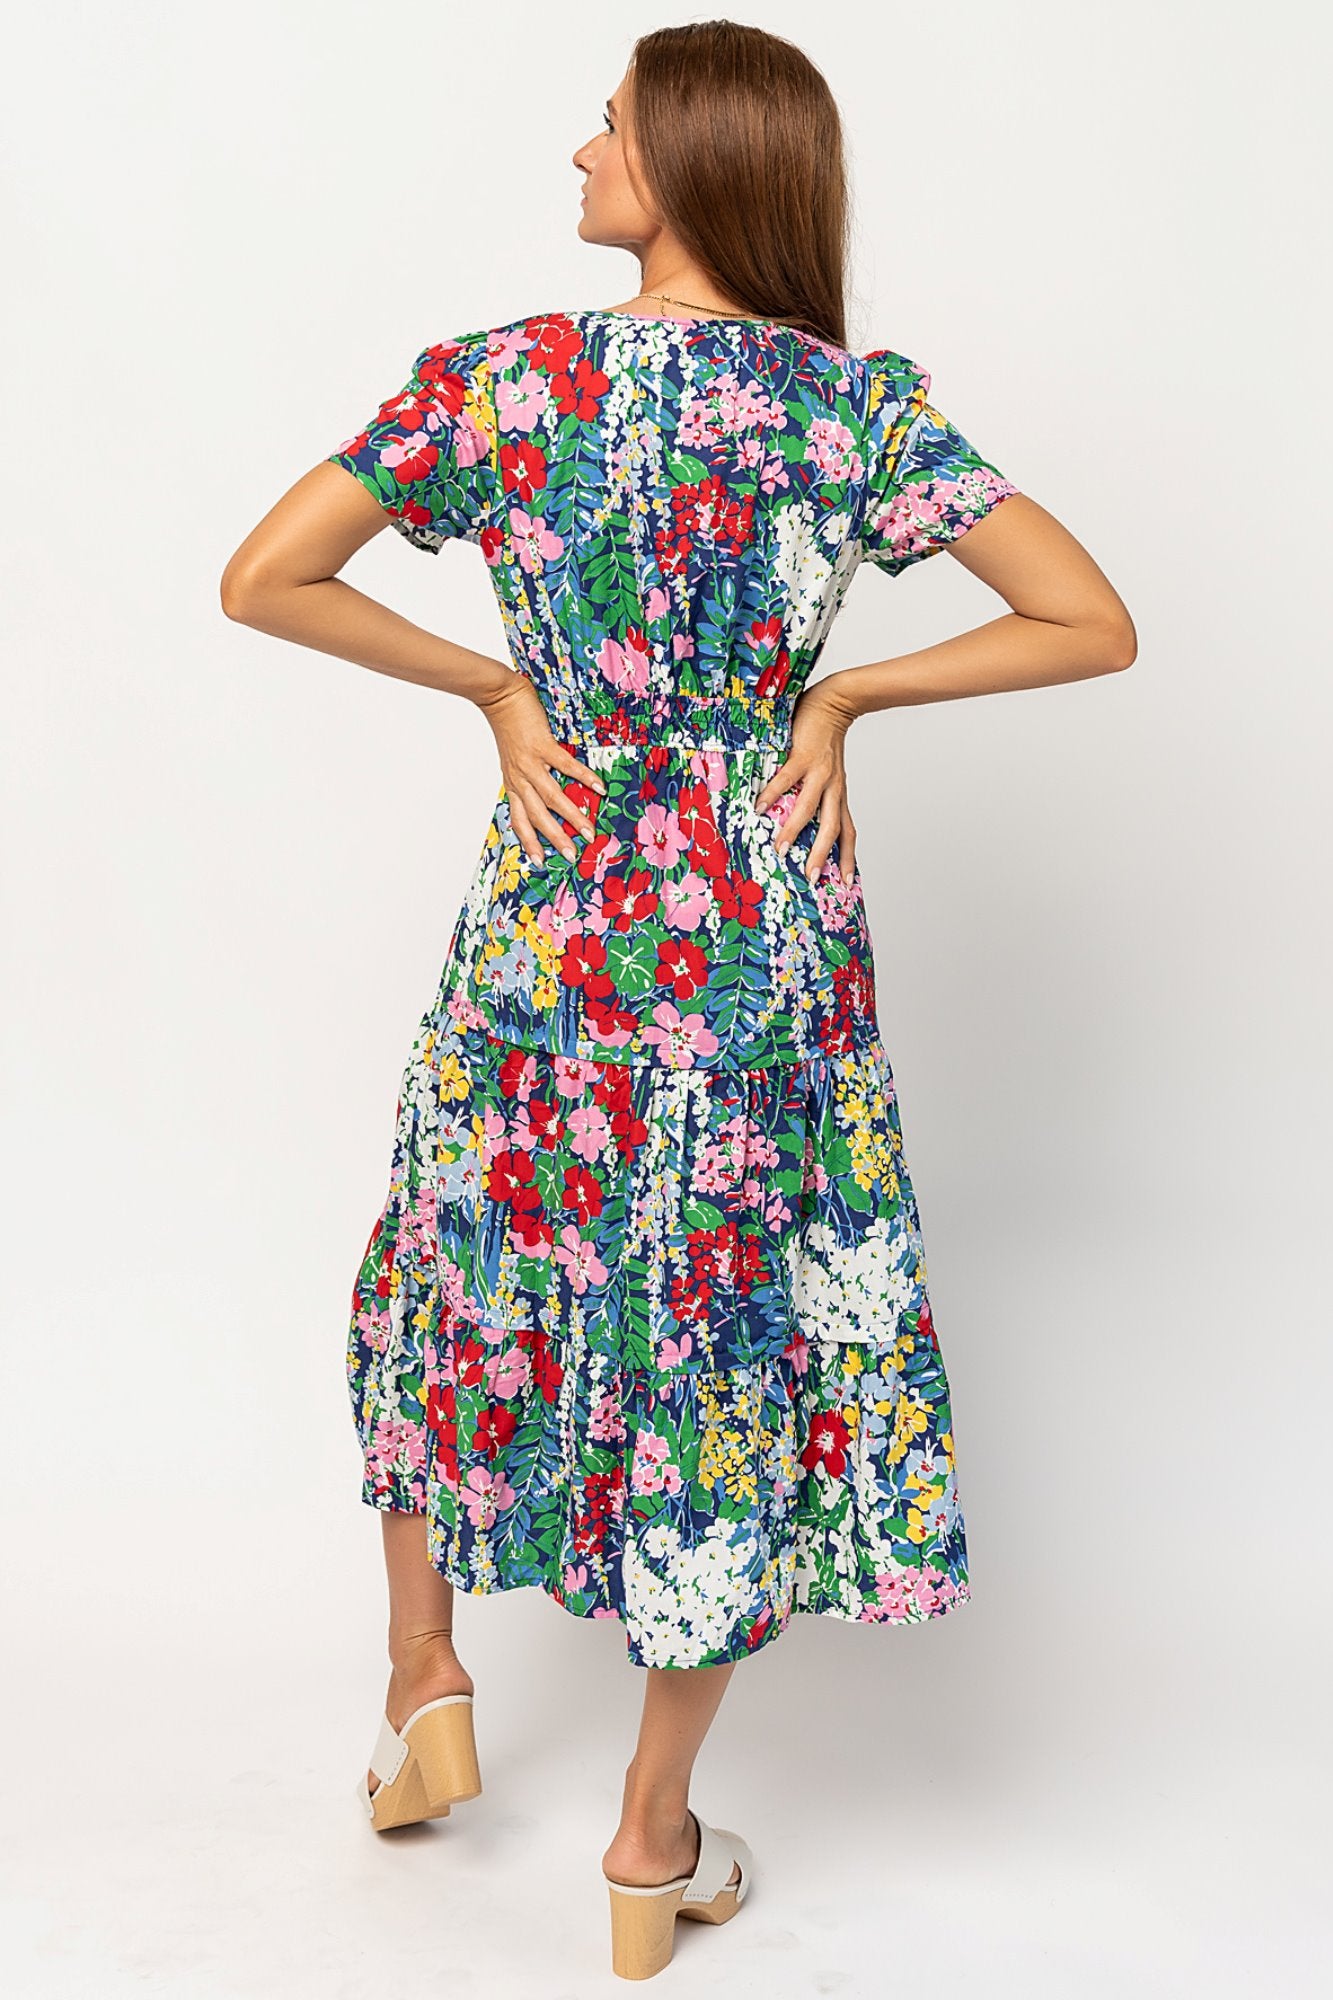 Roseland Dress (Small-3X) Holley Girl 